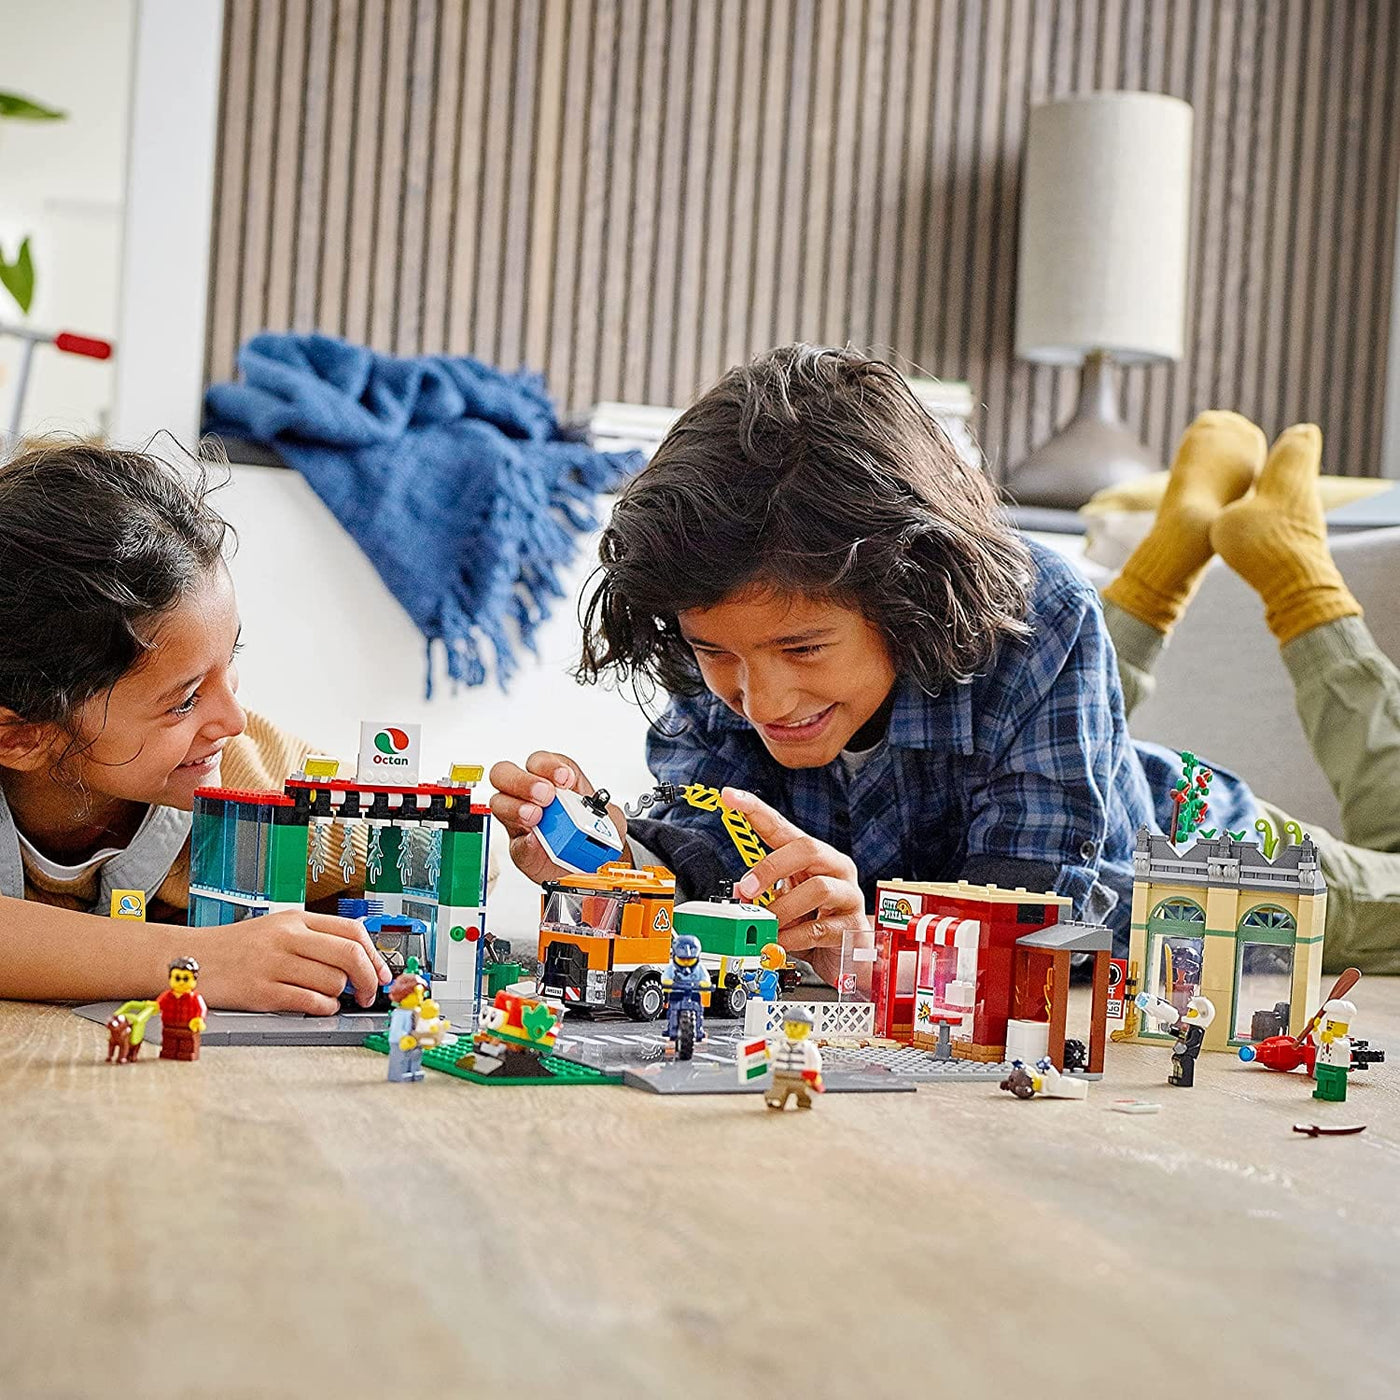 Town Center 60292- City | Lego by LEGO, Denmark Toy